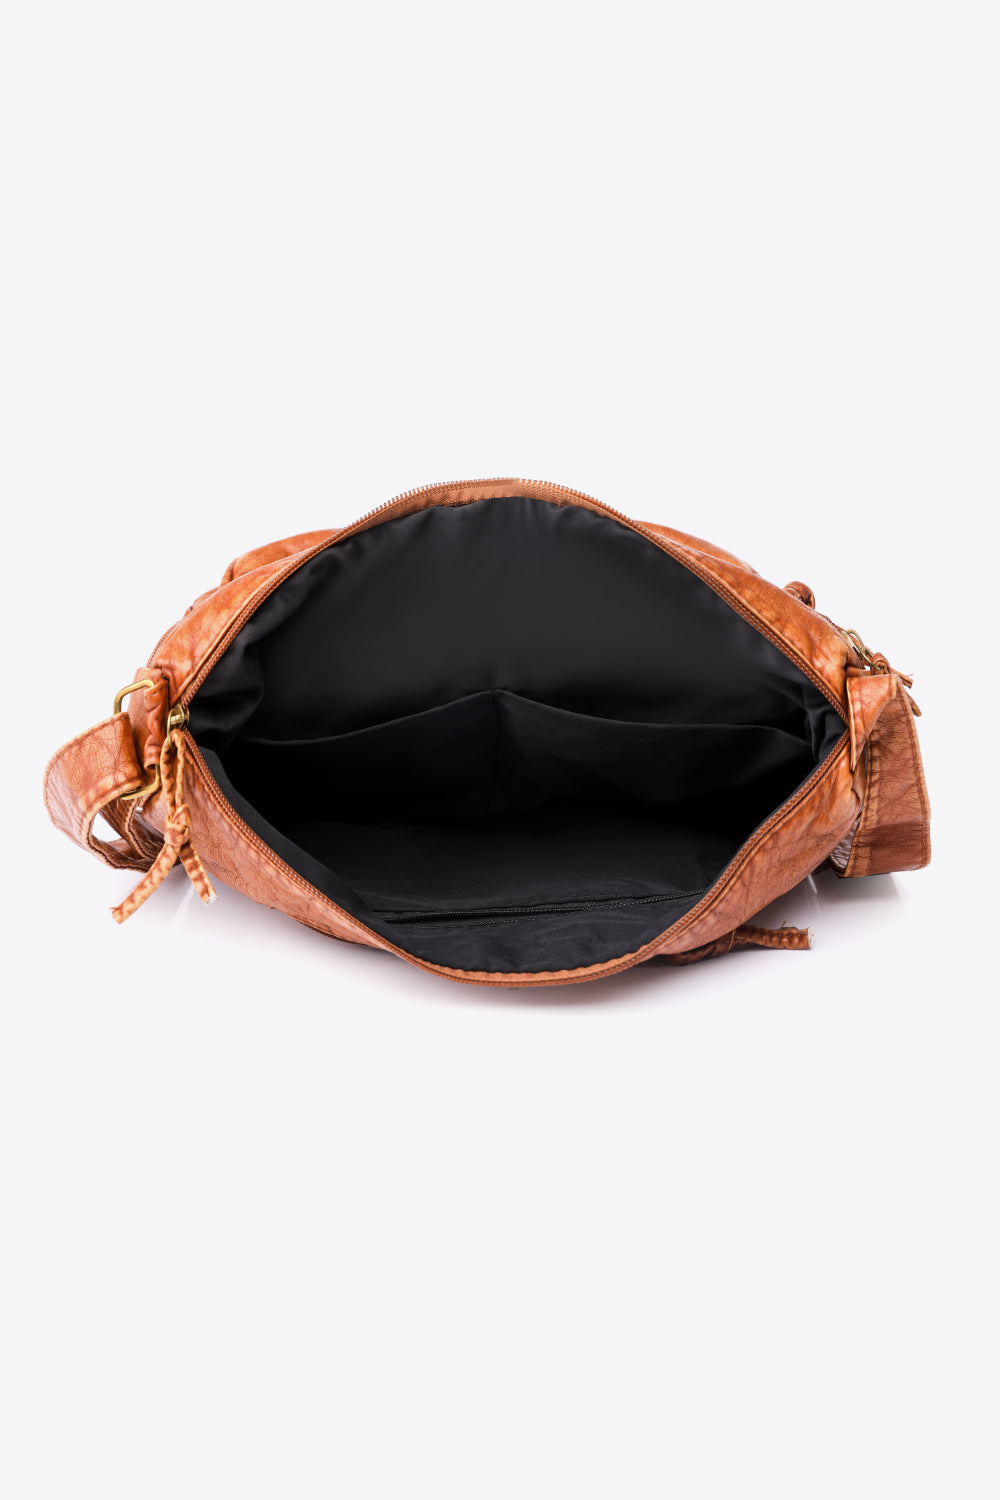 Baeful PU Leather Crossbody Bag